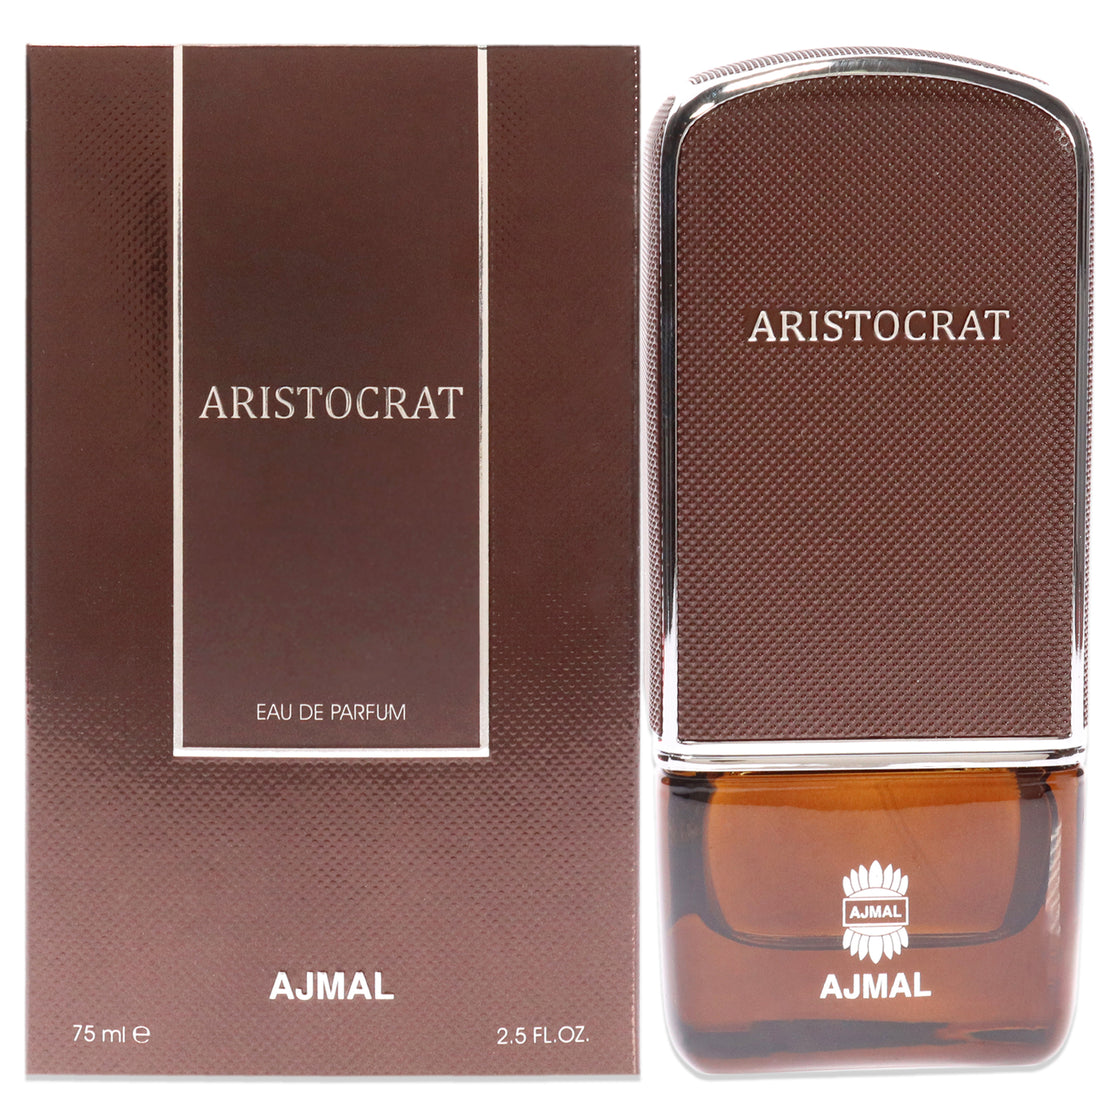 Aristocrat by Ajmal for Men - 2.5 oz EDP Spray